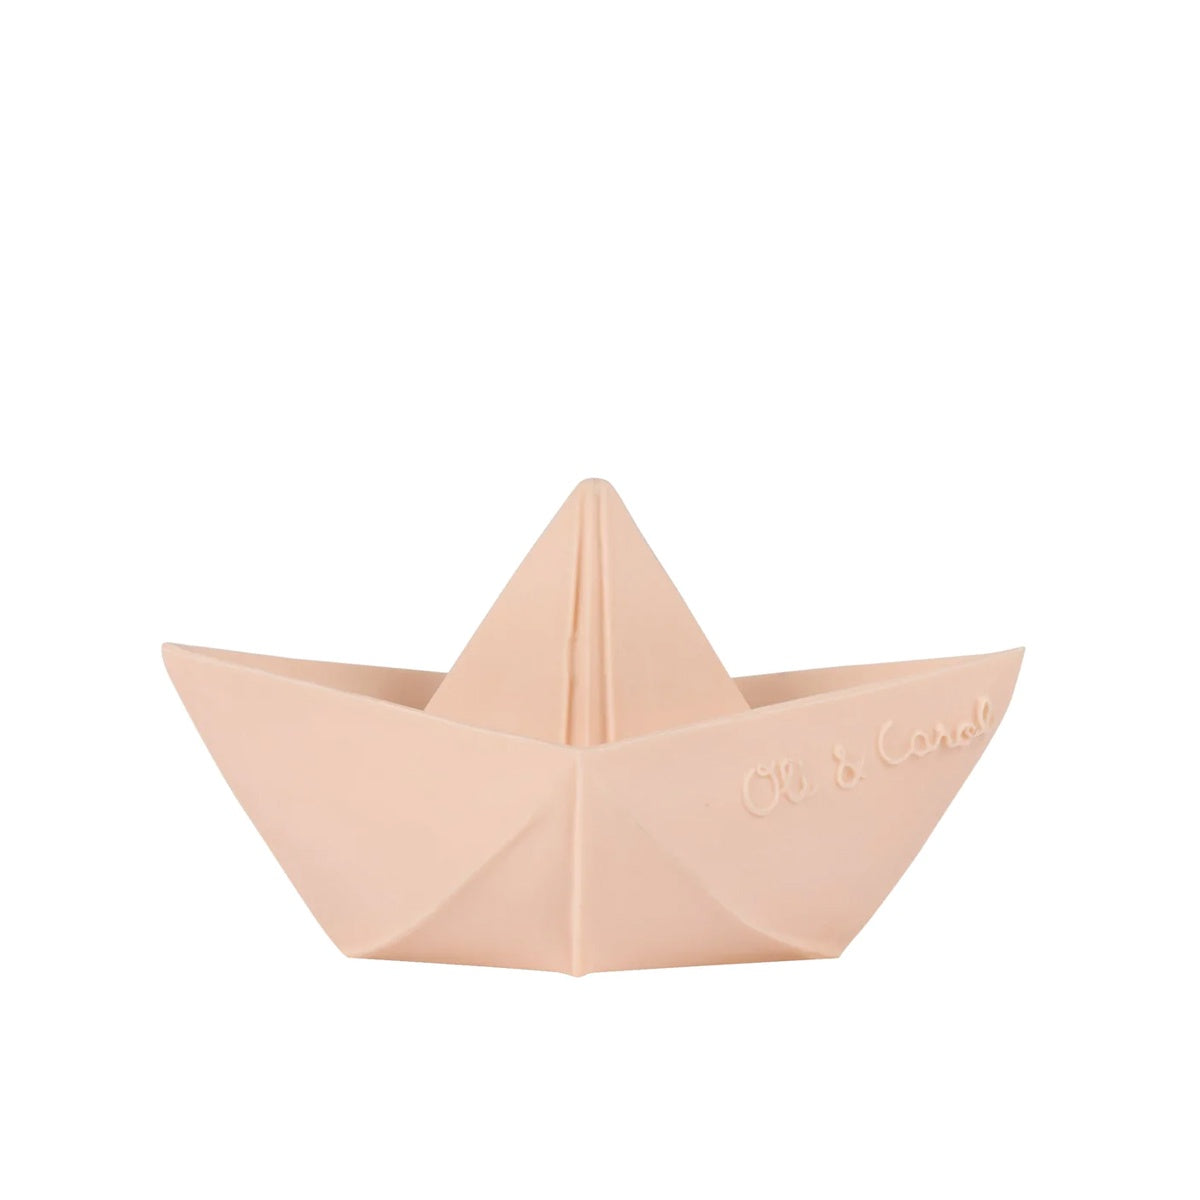 Oli & Carol Teether - Origami Boat Nude